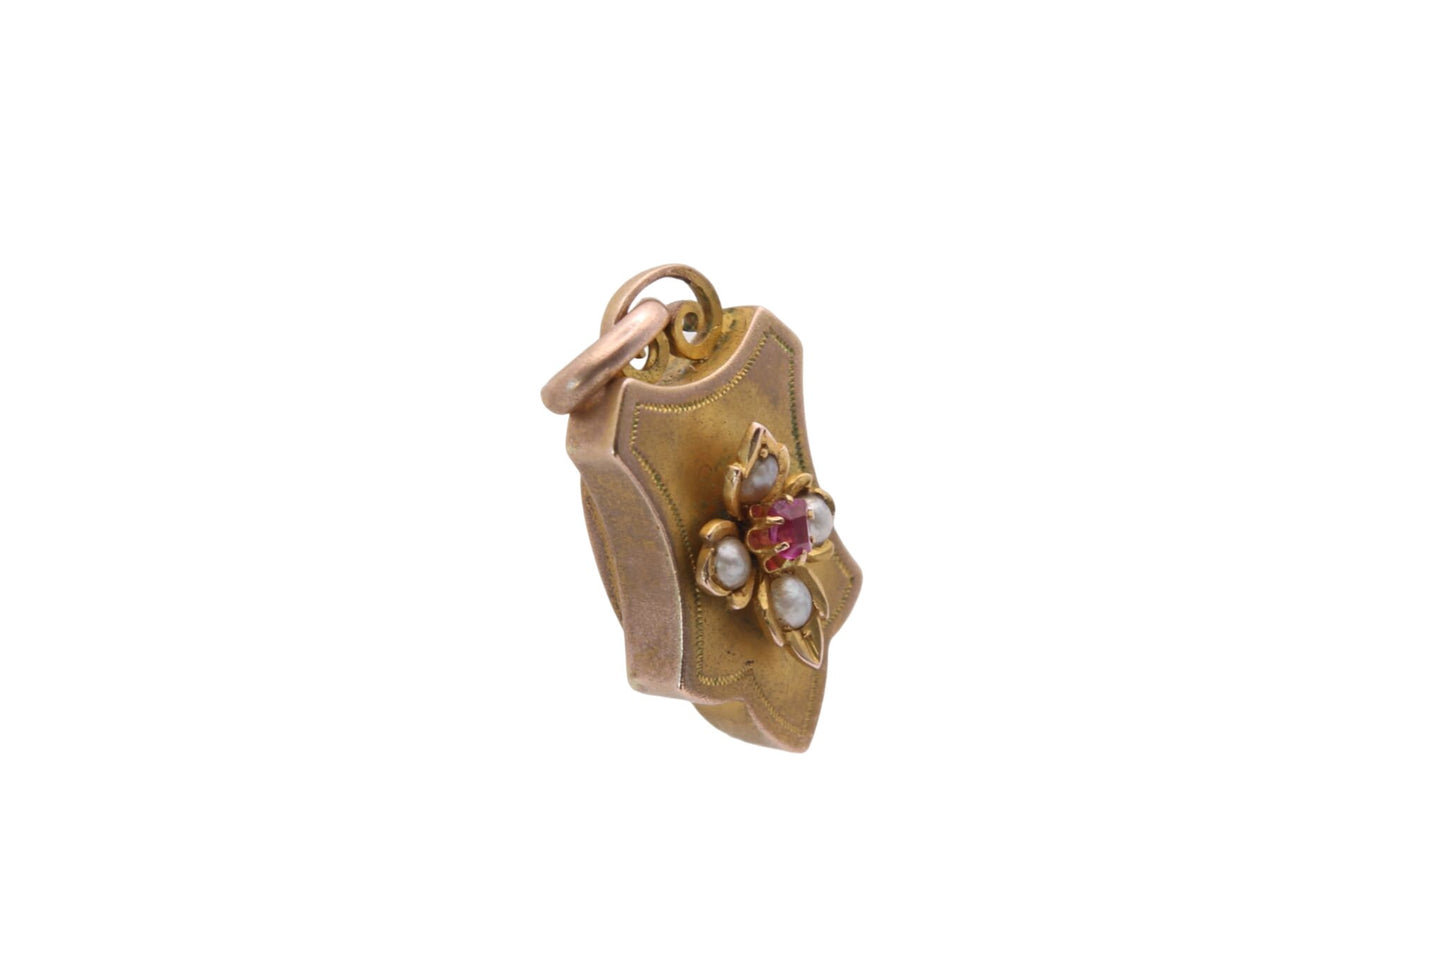 Antique 15ct Gold, Ruby & Pearl Keepsake Pendant Locket